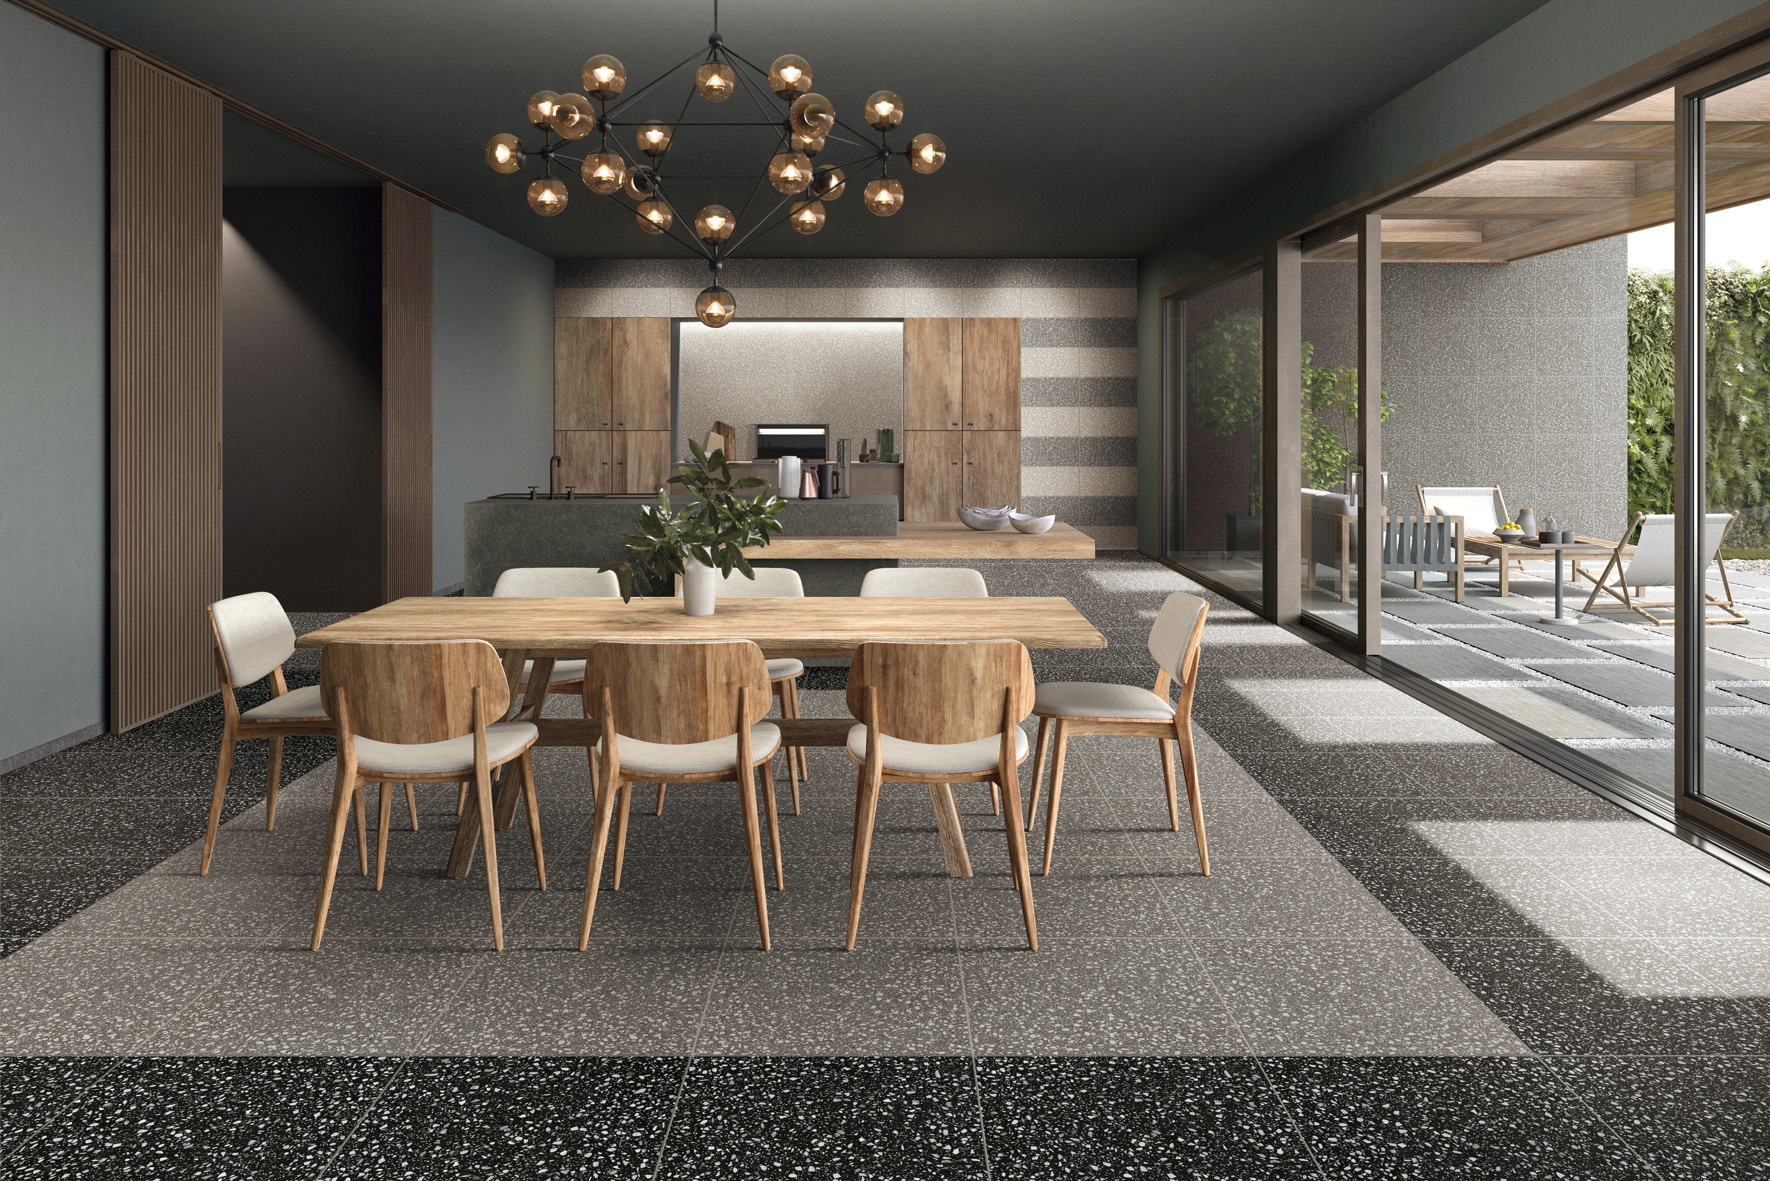 24''x 24'' Glazed Terrazzo Floor Tiles Flooring Bathroom Kitchen wholesale custom